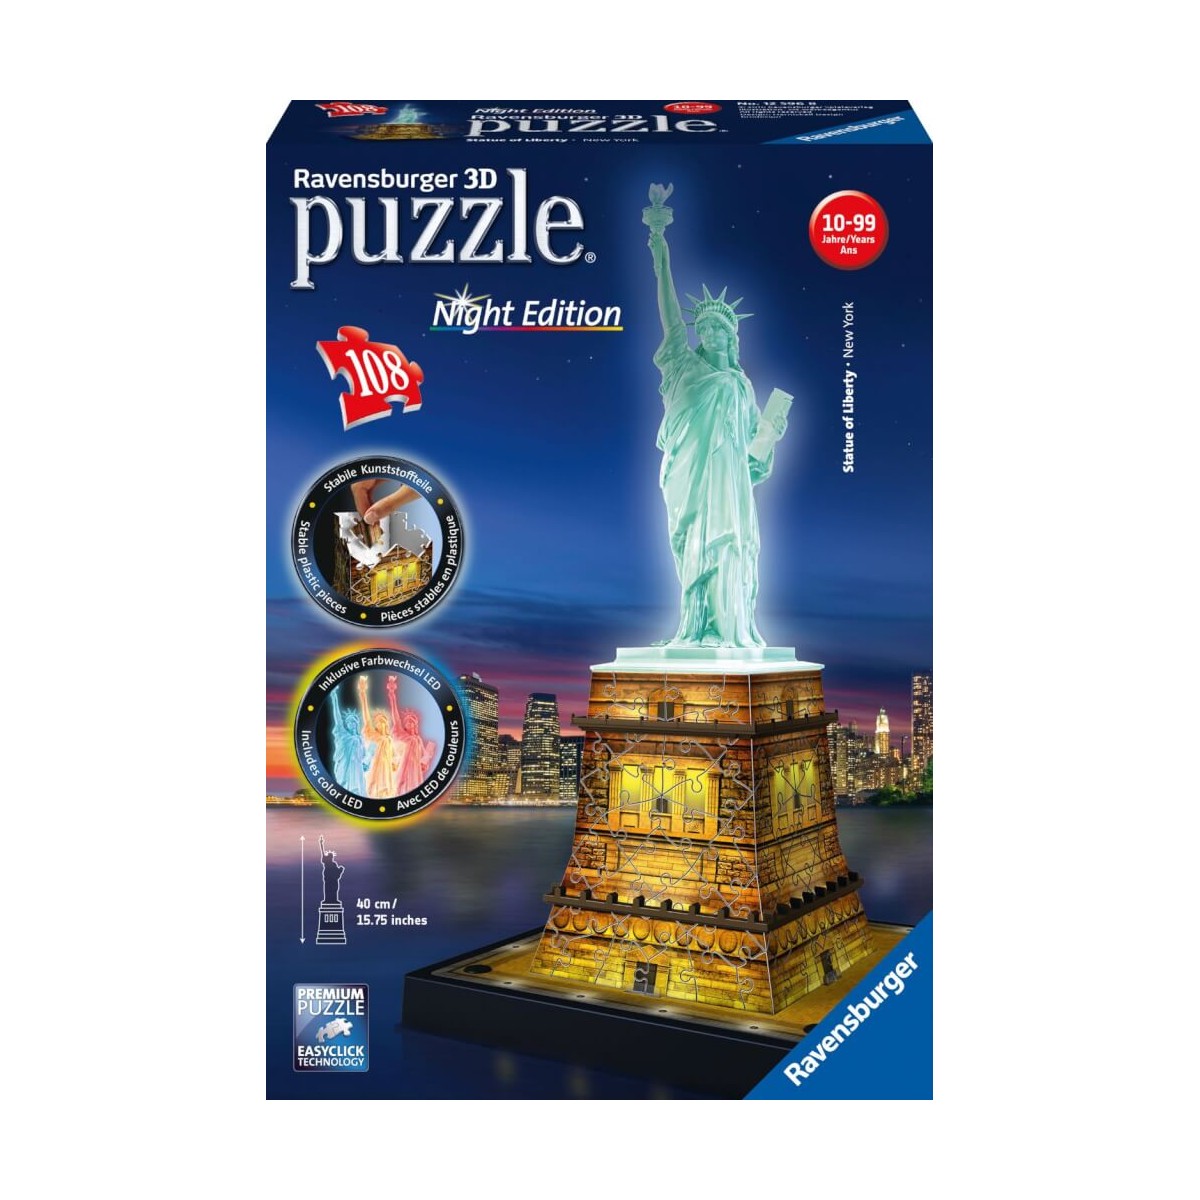 Ravensburger 12596 Puzzle 3D Freiheitsstatue Night Edition 108 Teile